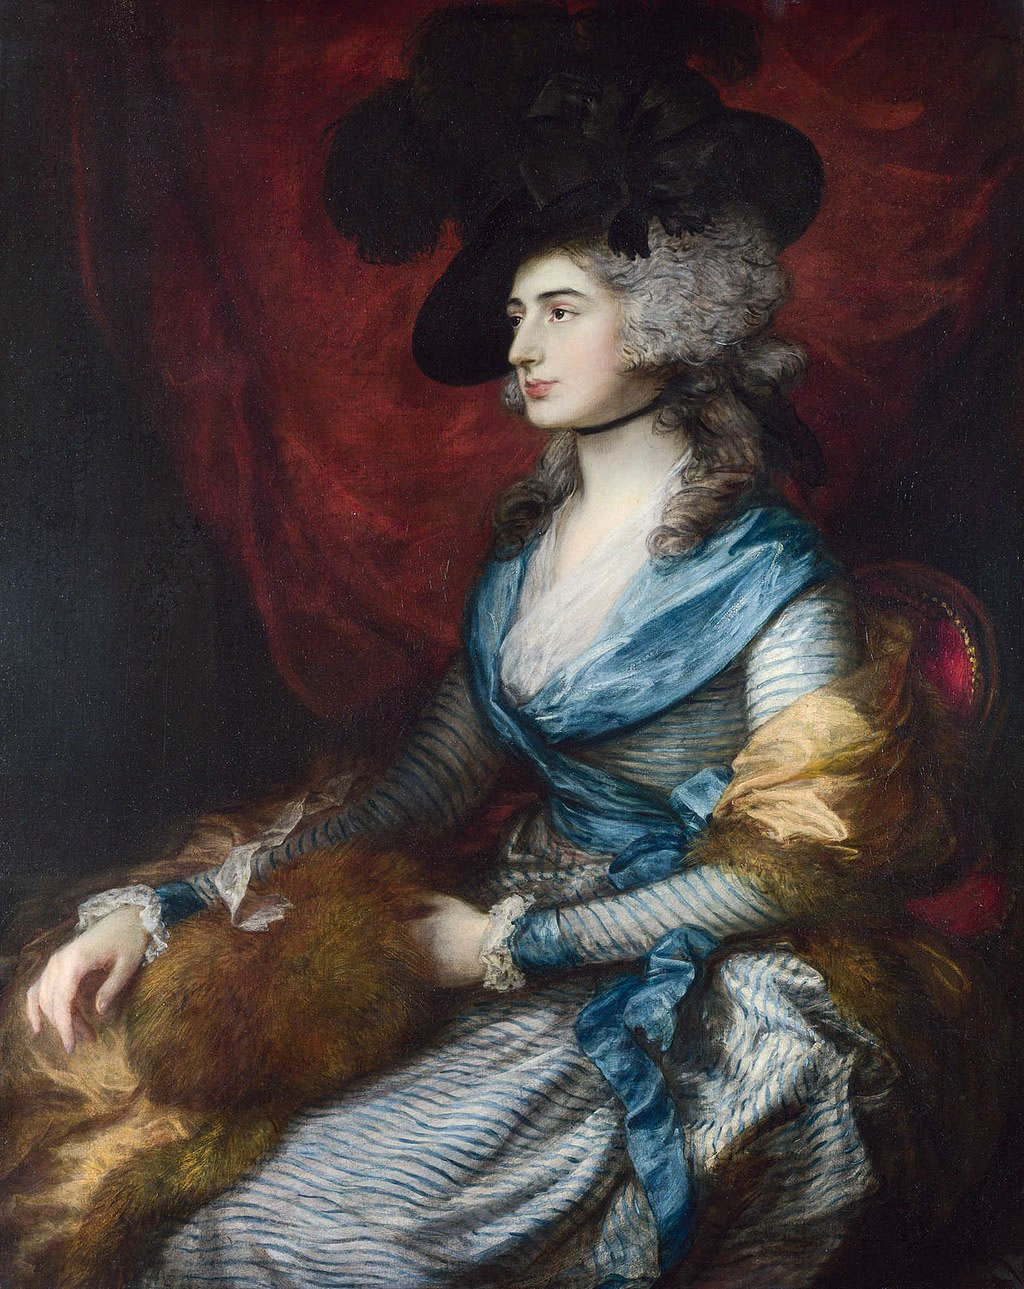 1785 portrait of Mrs Siddons by Thomas Gainsborough